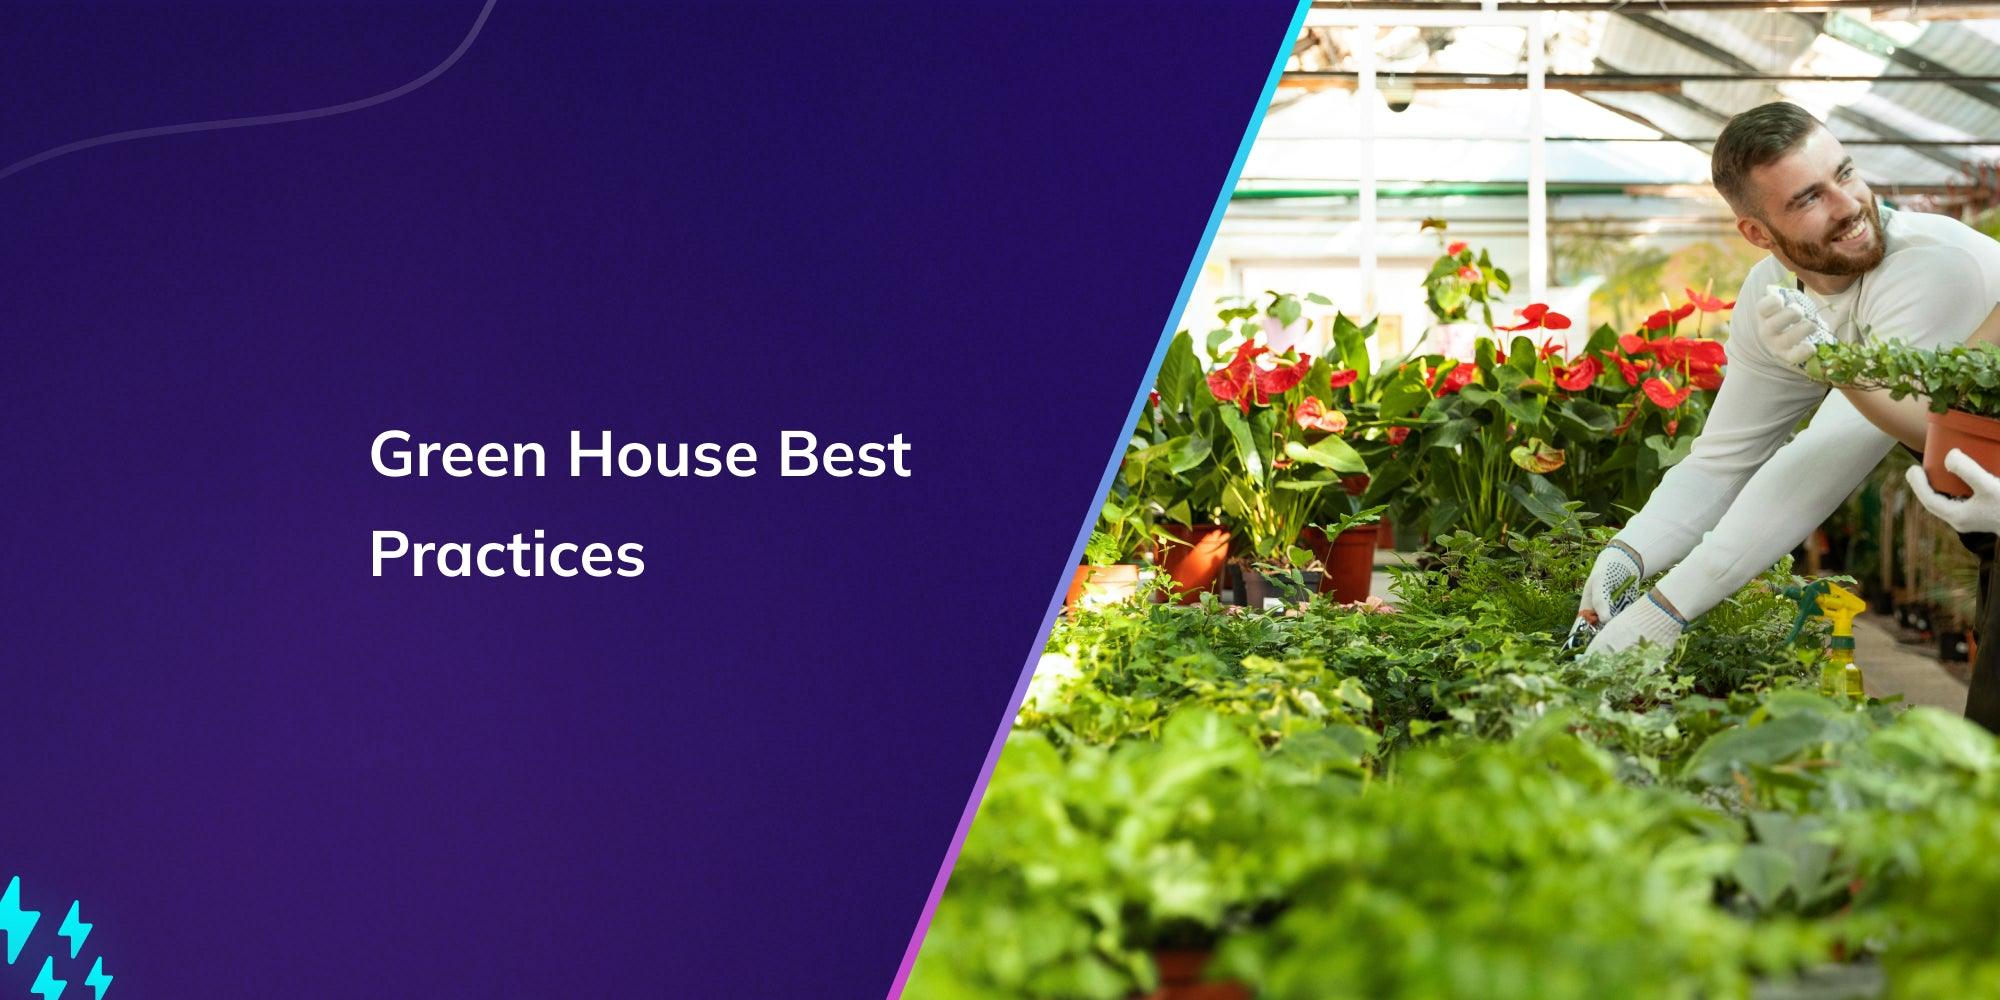 Greenhouse Best Practices